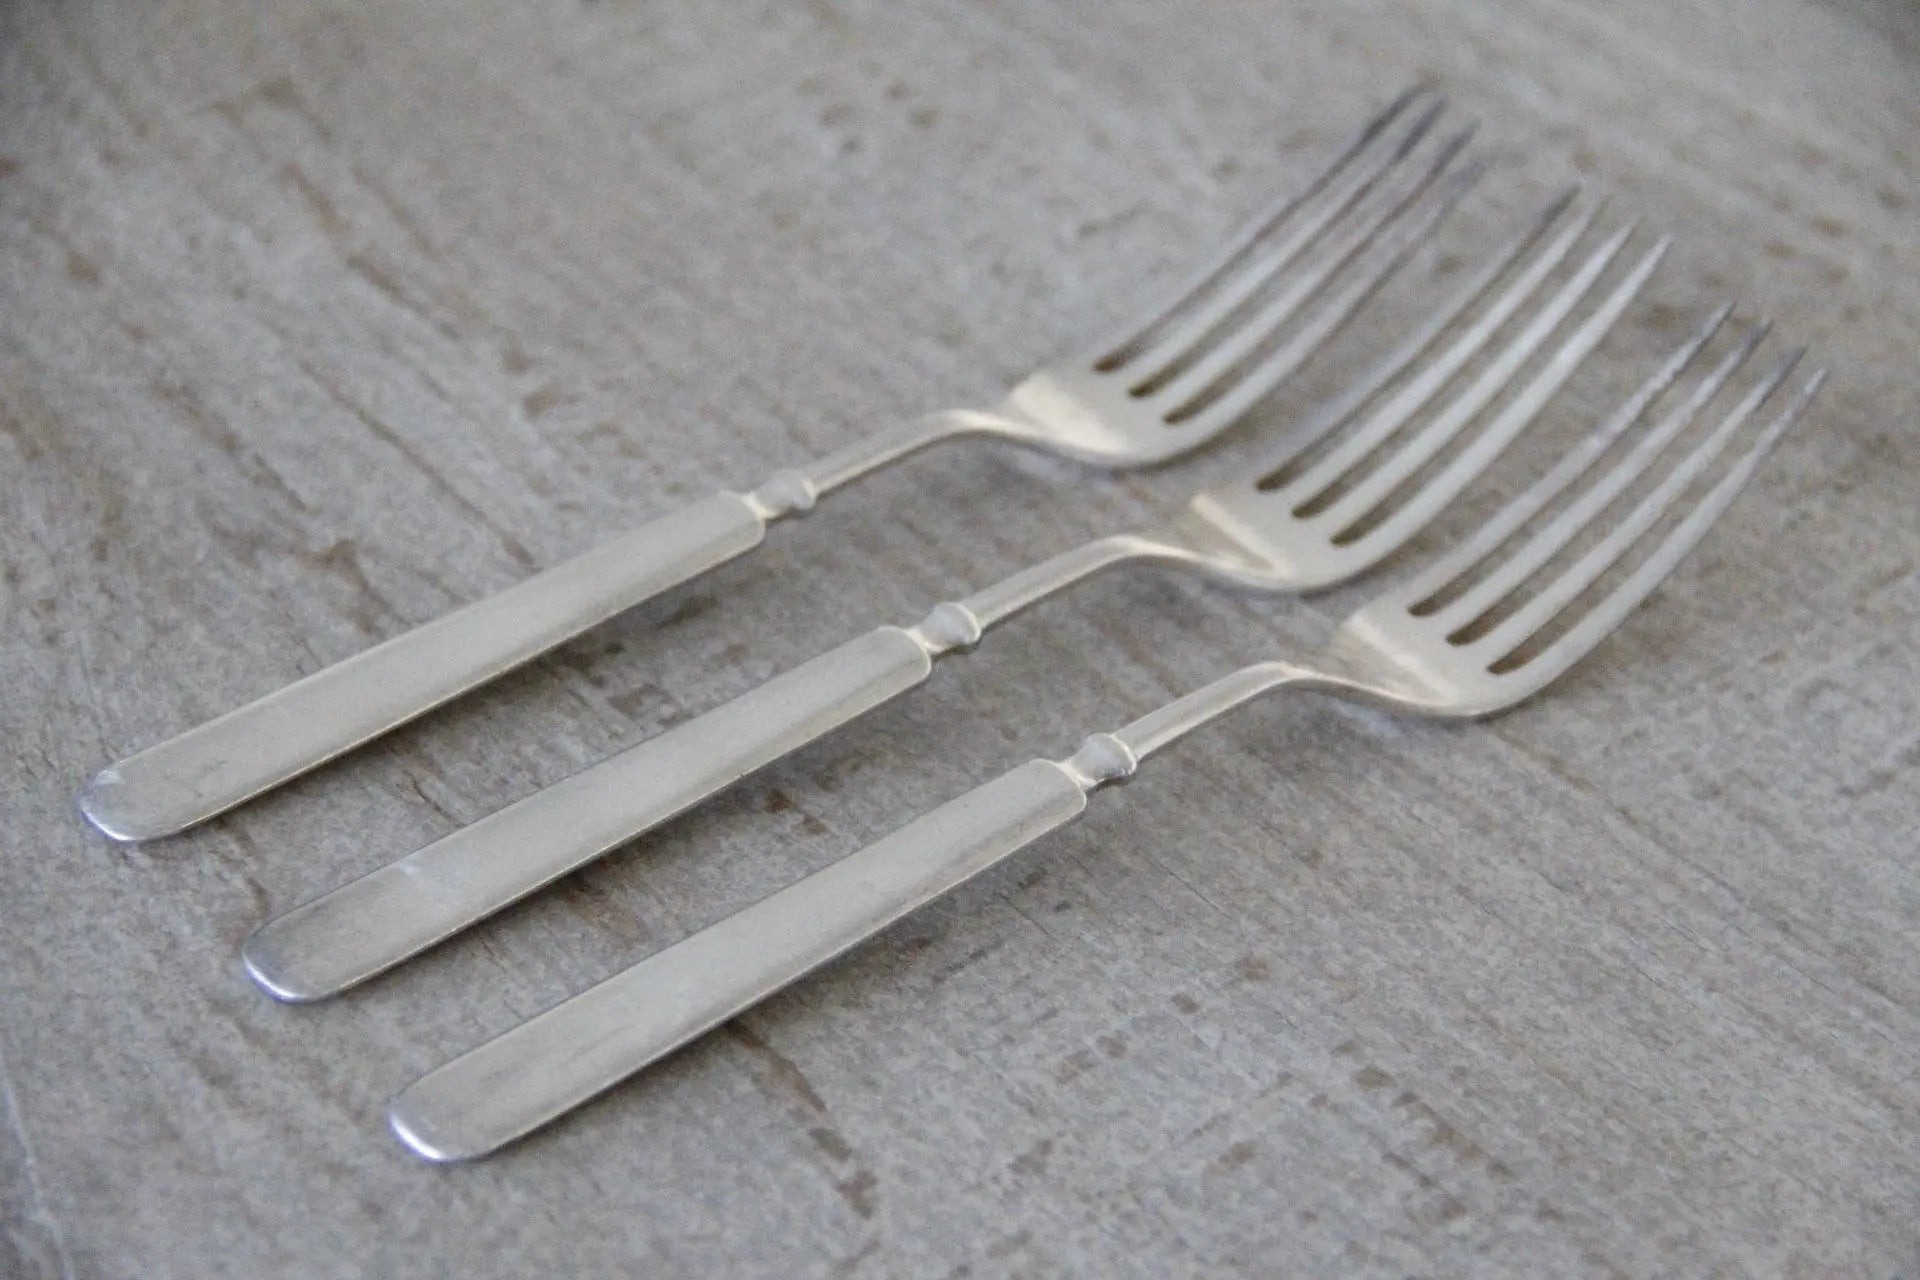 Antique Silver Dinner Fork | Flatware 3 Pcs.  Debra Hall Lifestyle